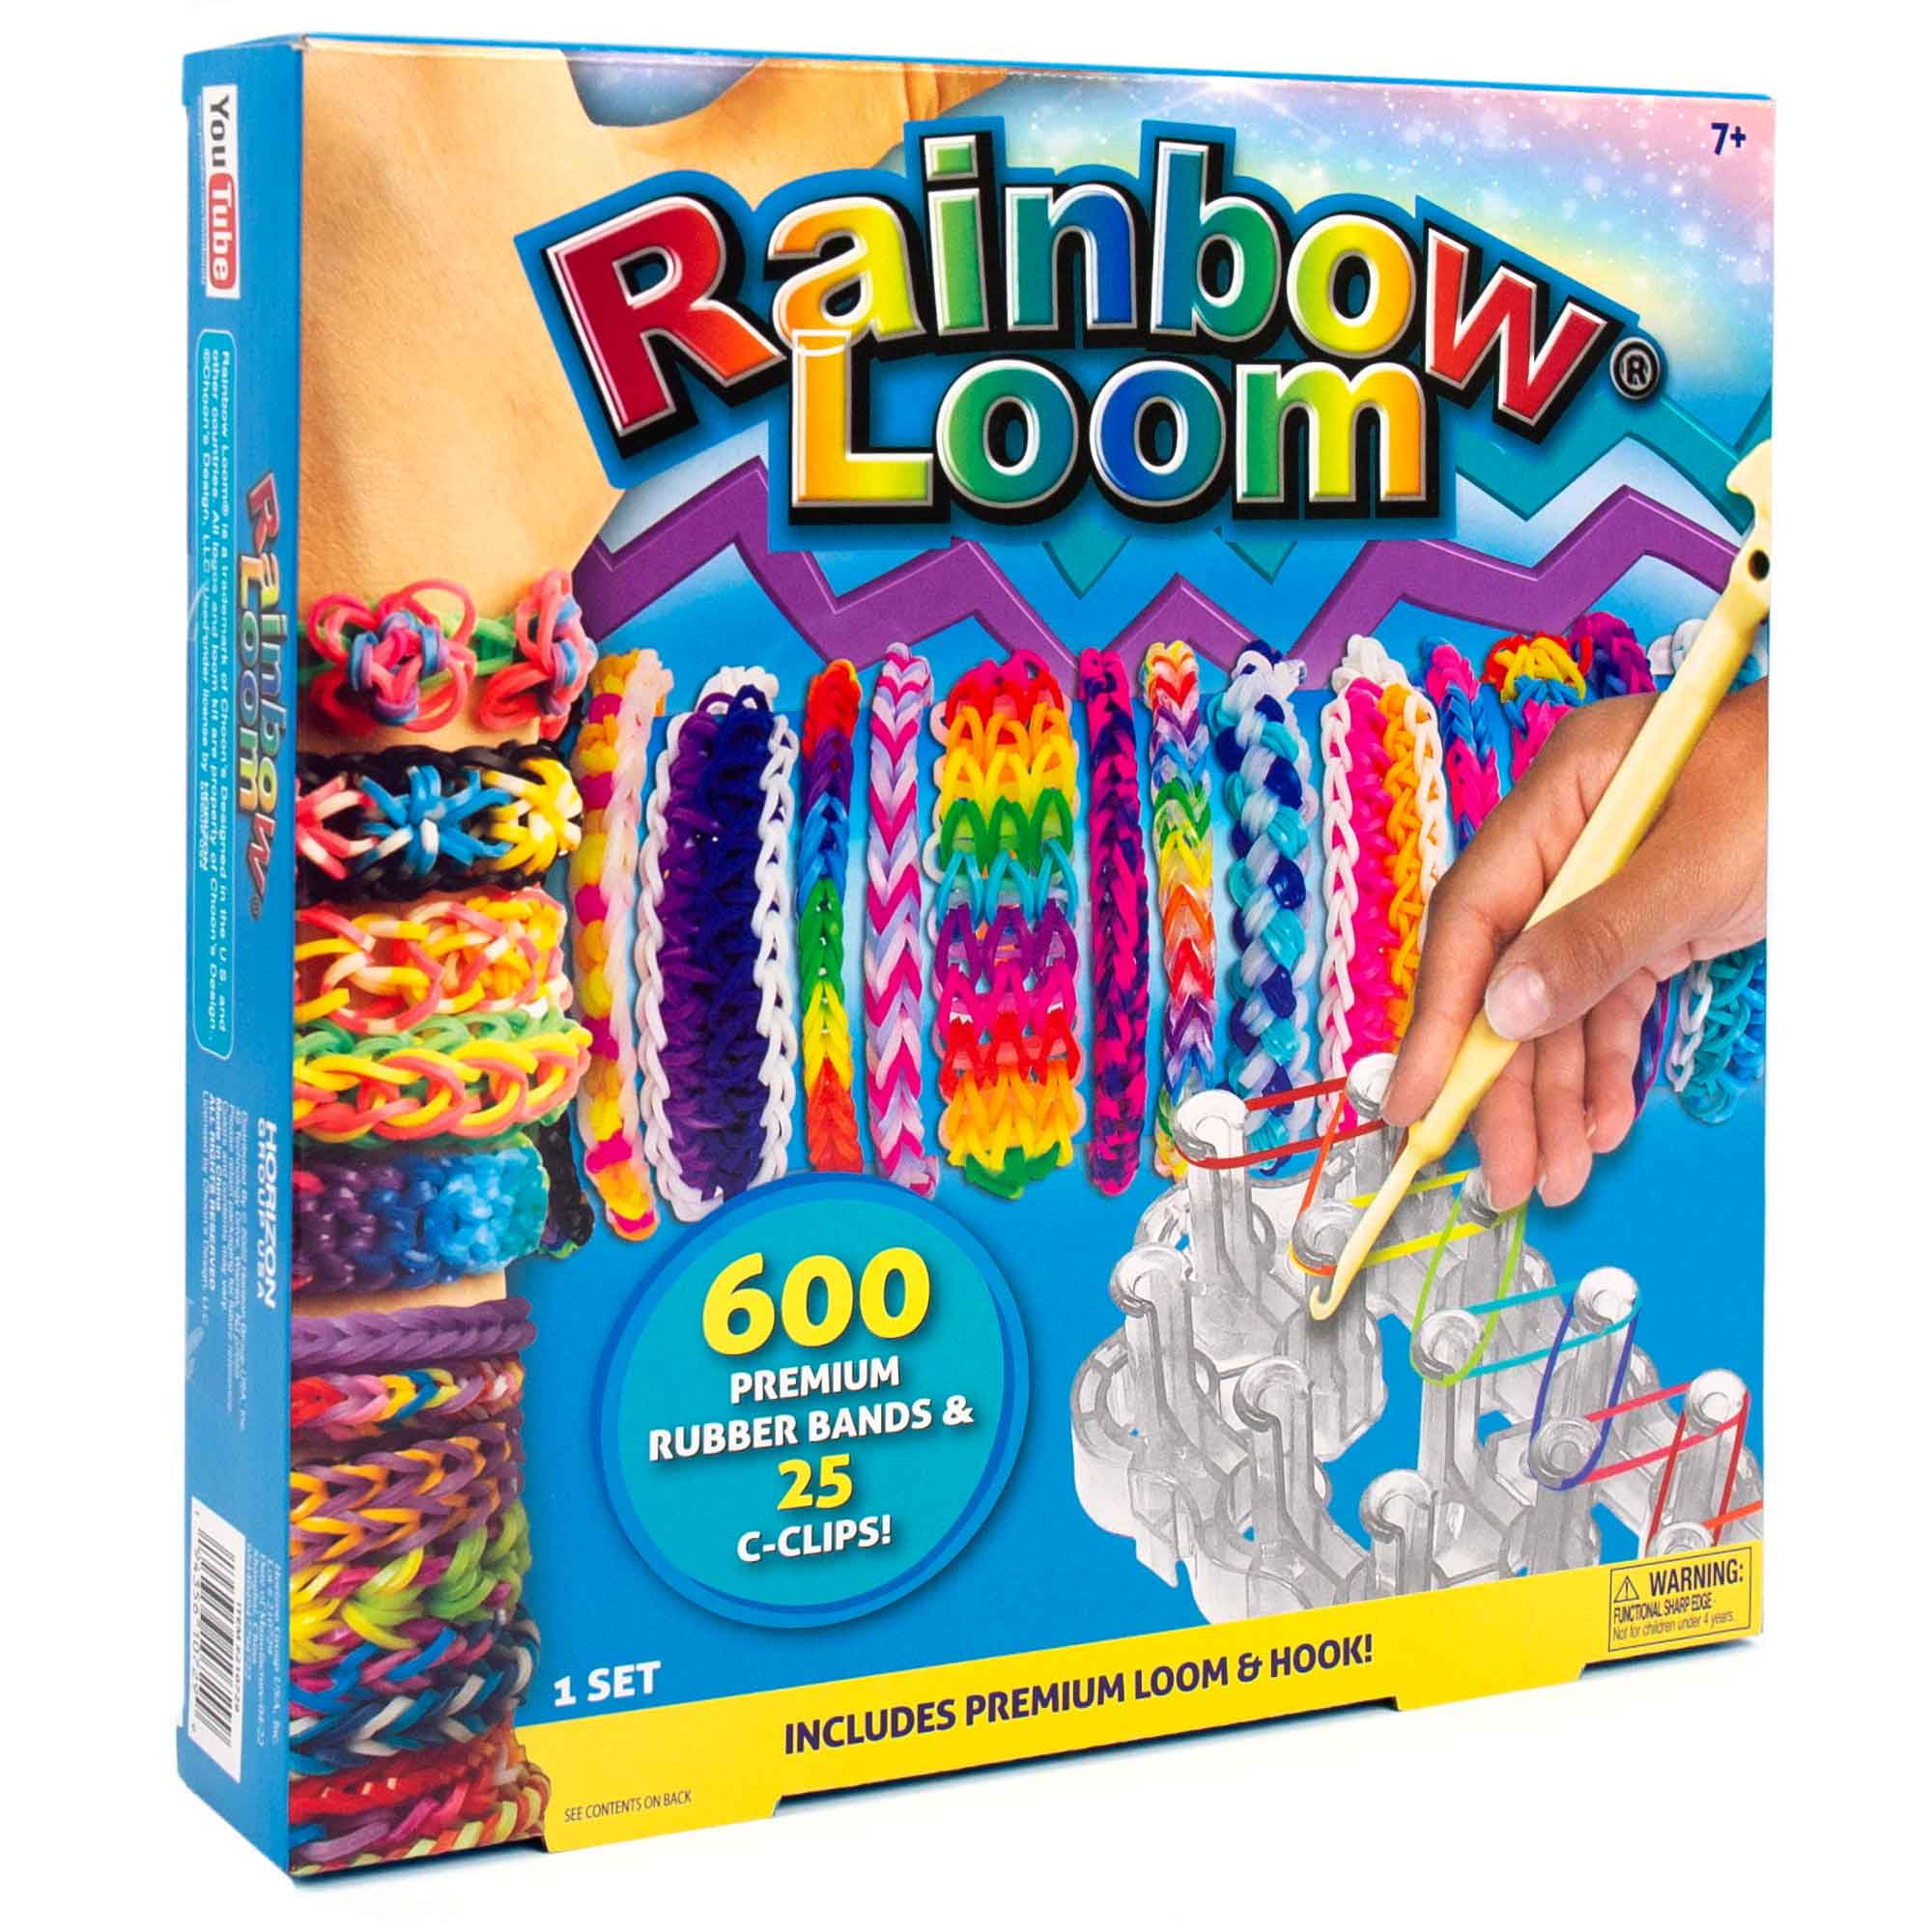 Buy Wholesale China 600-1500pcs+ Colorful Loom Bands Set Candy Color Bracelet  Making Kit Diy Rubber Band Woven Bracelet & Loom Band Kits at USD 1.55